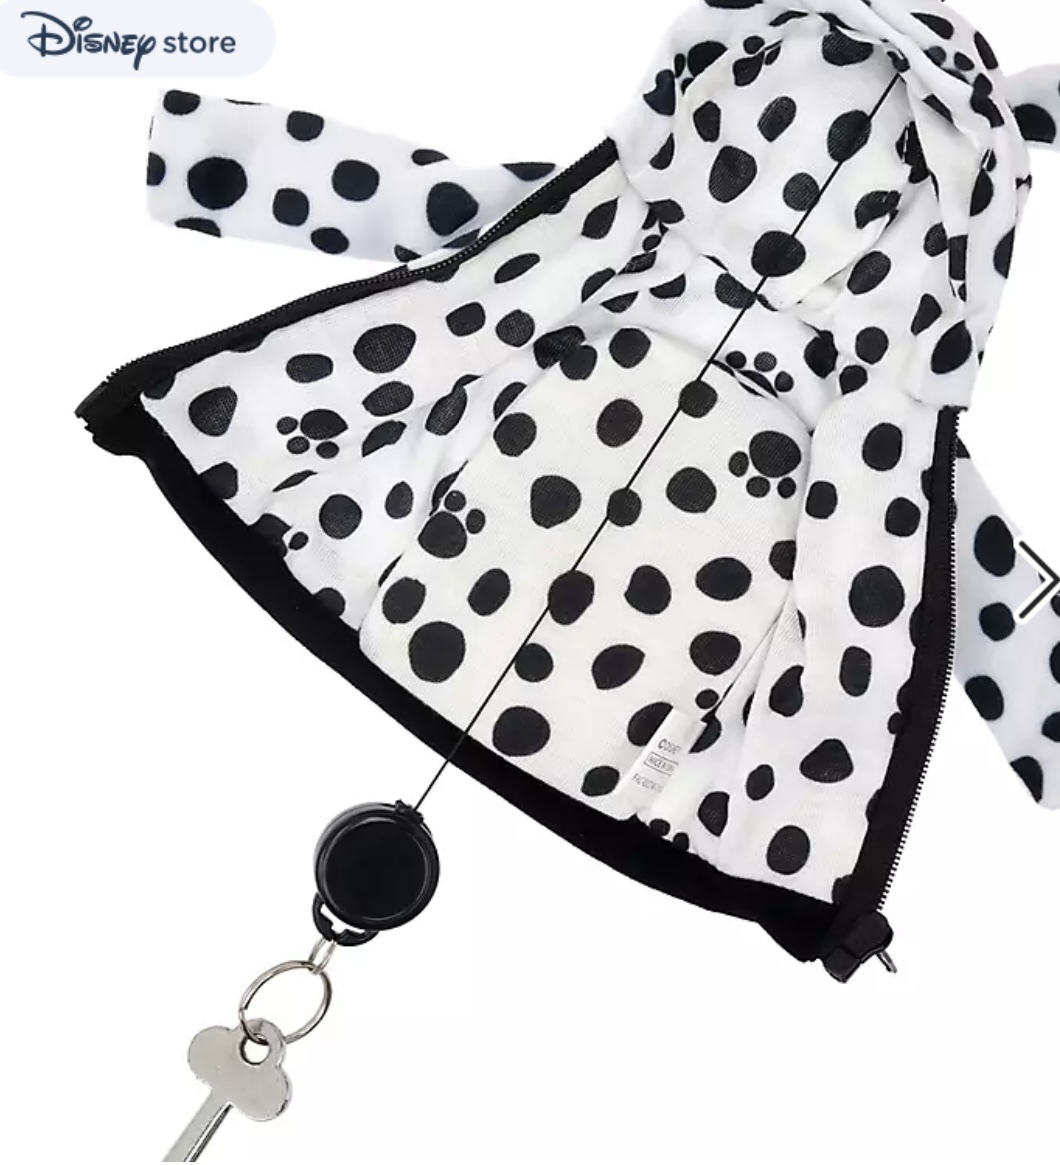  Disney 101 далматинец брелок для ключа цепочка для ключей катушка модель собака Parker способ Disney магазин ......